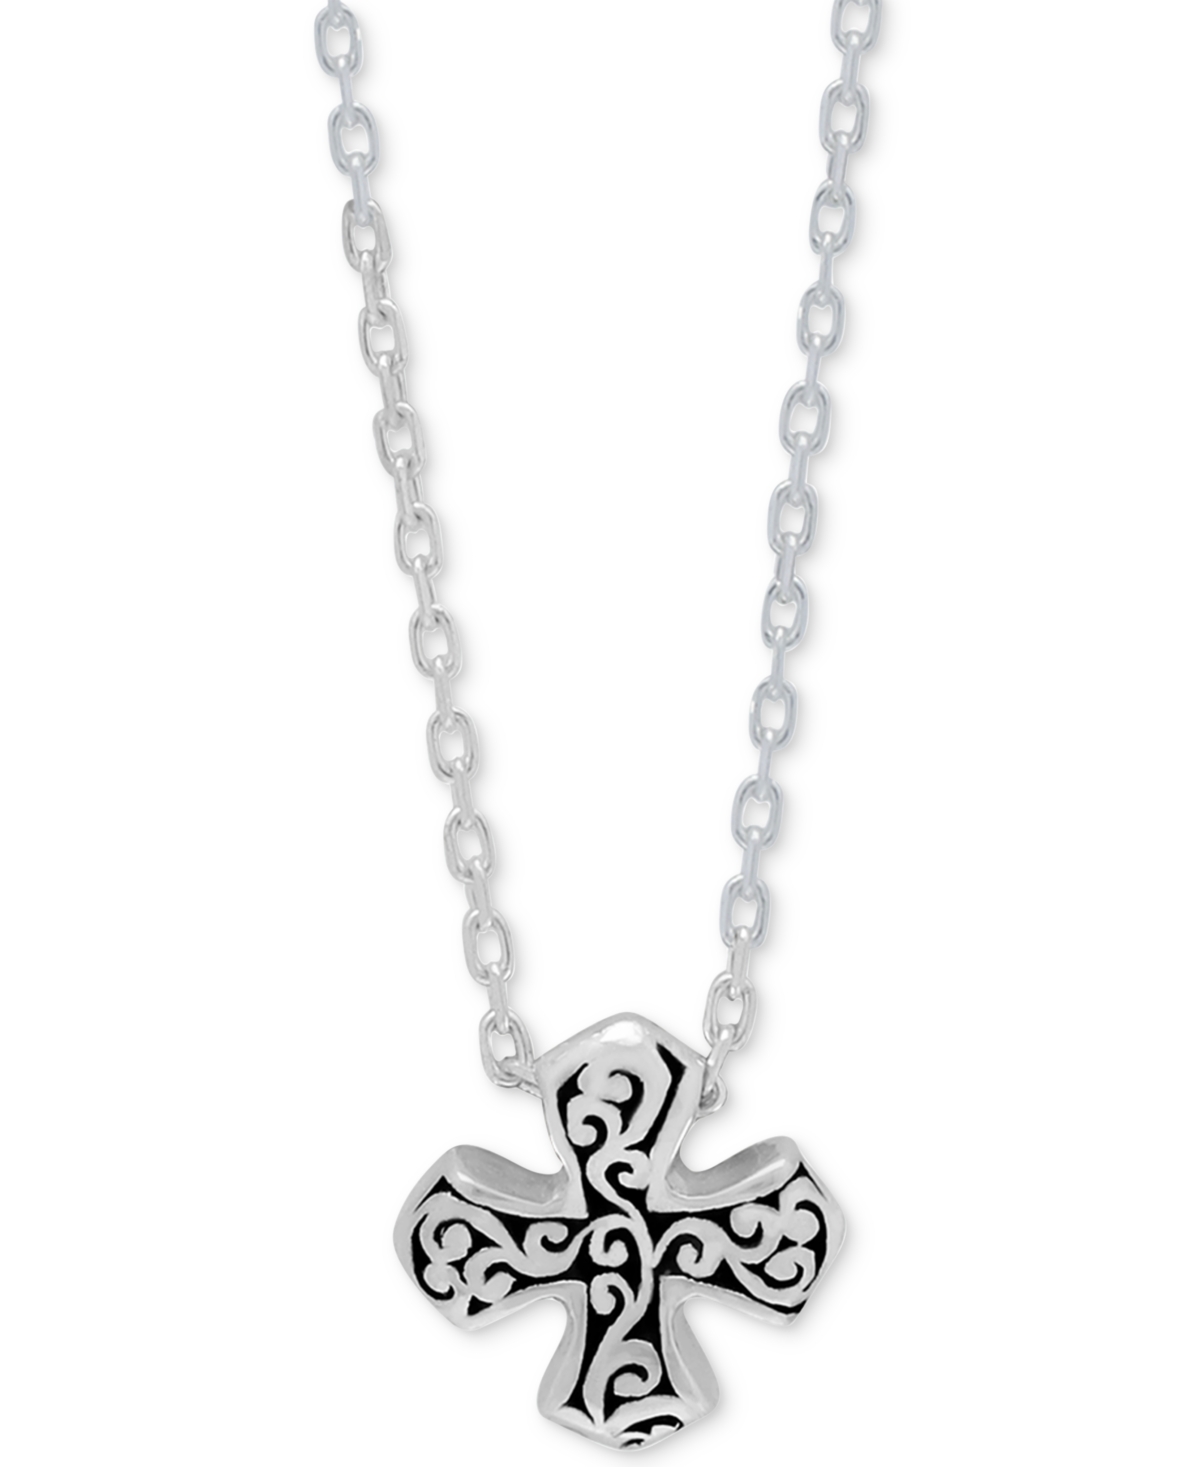 Filigree Maltese Cross Pendant Necklace in Sterling Silver, 18" + 2" extender - Silver